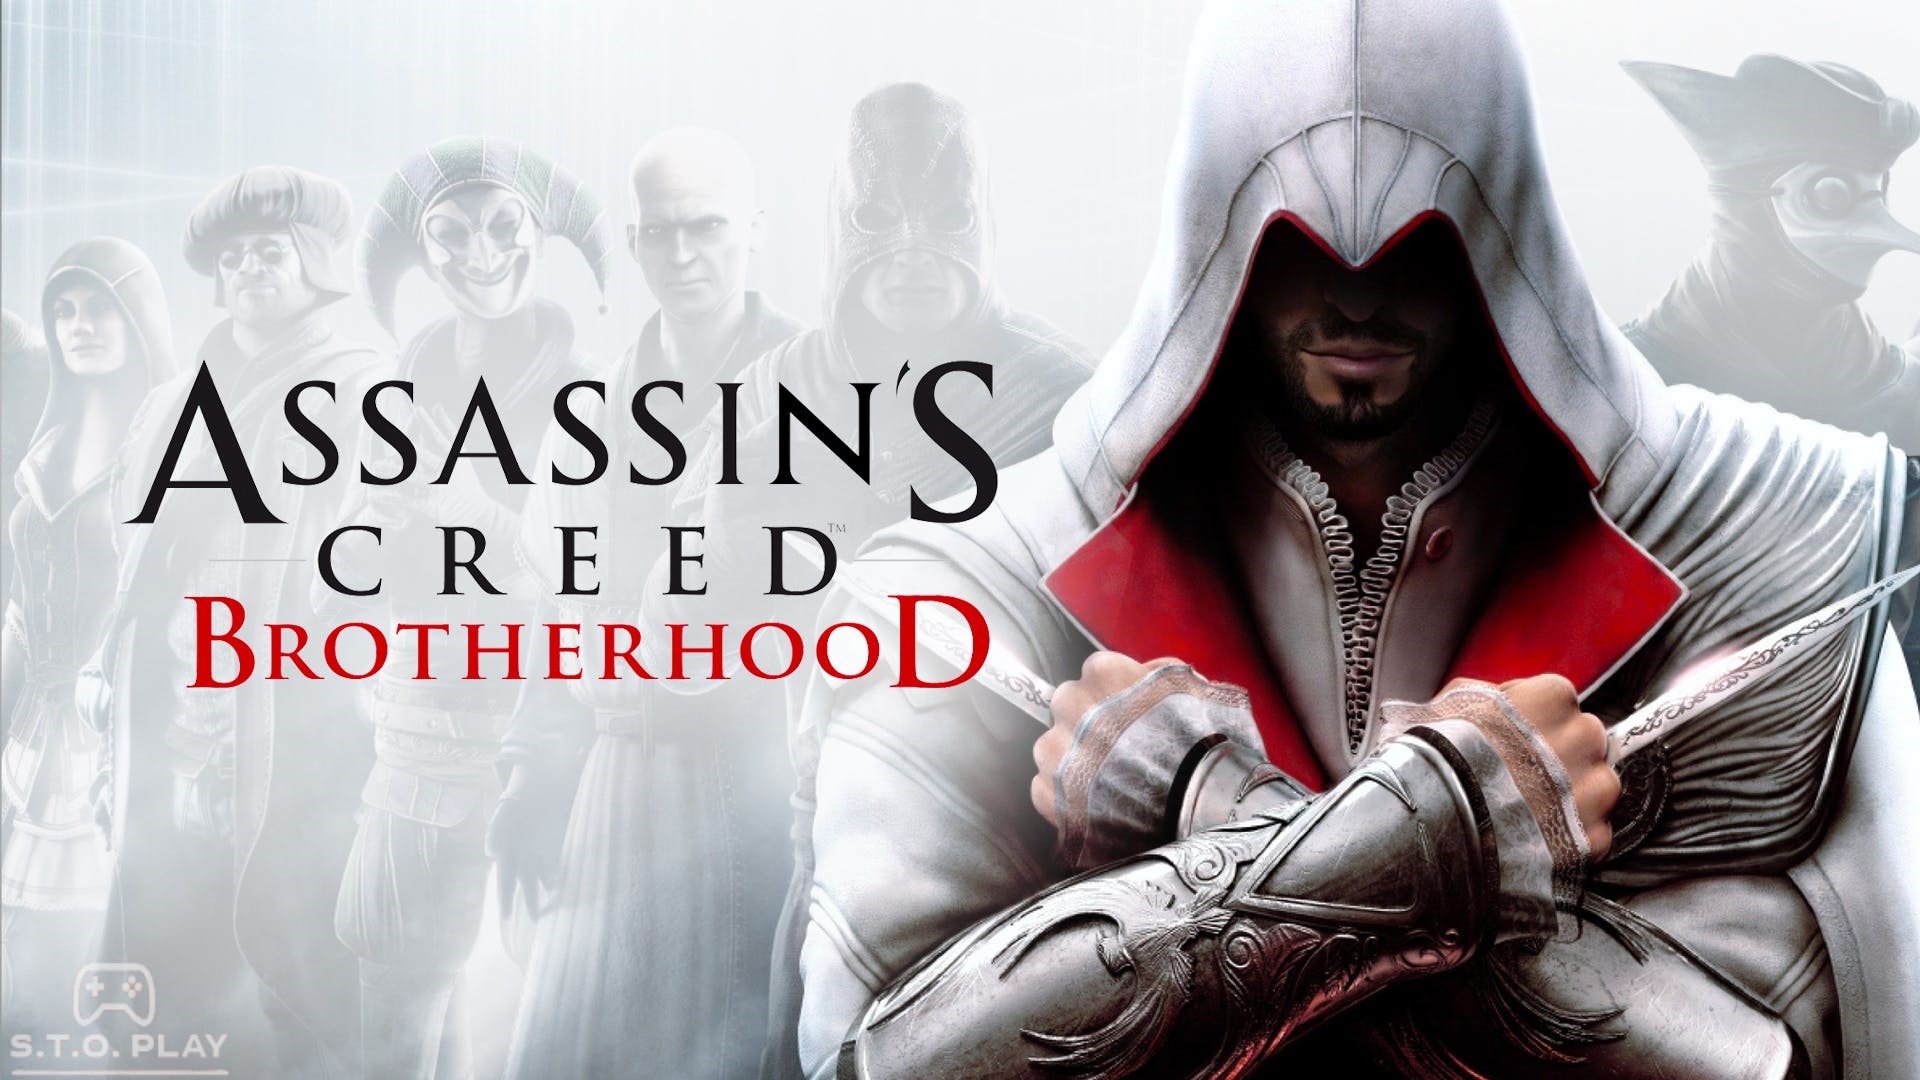 Creed brotherhood прохождение. Код да Винчи ассасин братство крови. Assassin's Creed Brotherhood ps4. Ассасин Крид братство крови Эцио. Assassins Creed Brotherhood Ezio collection.